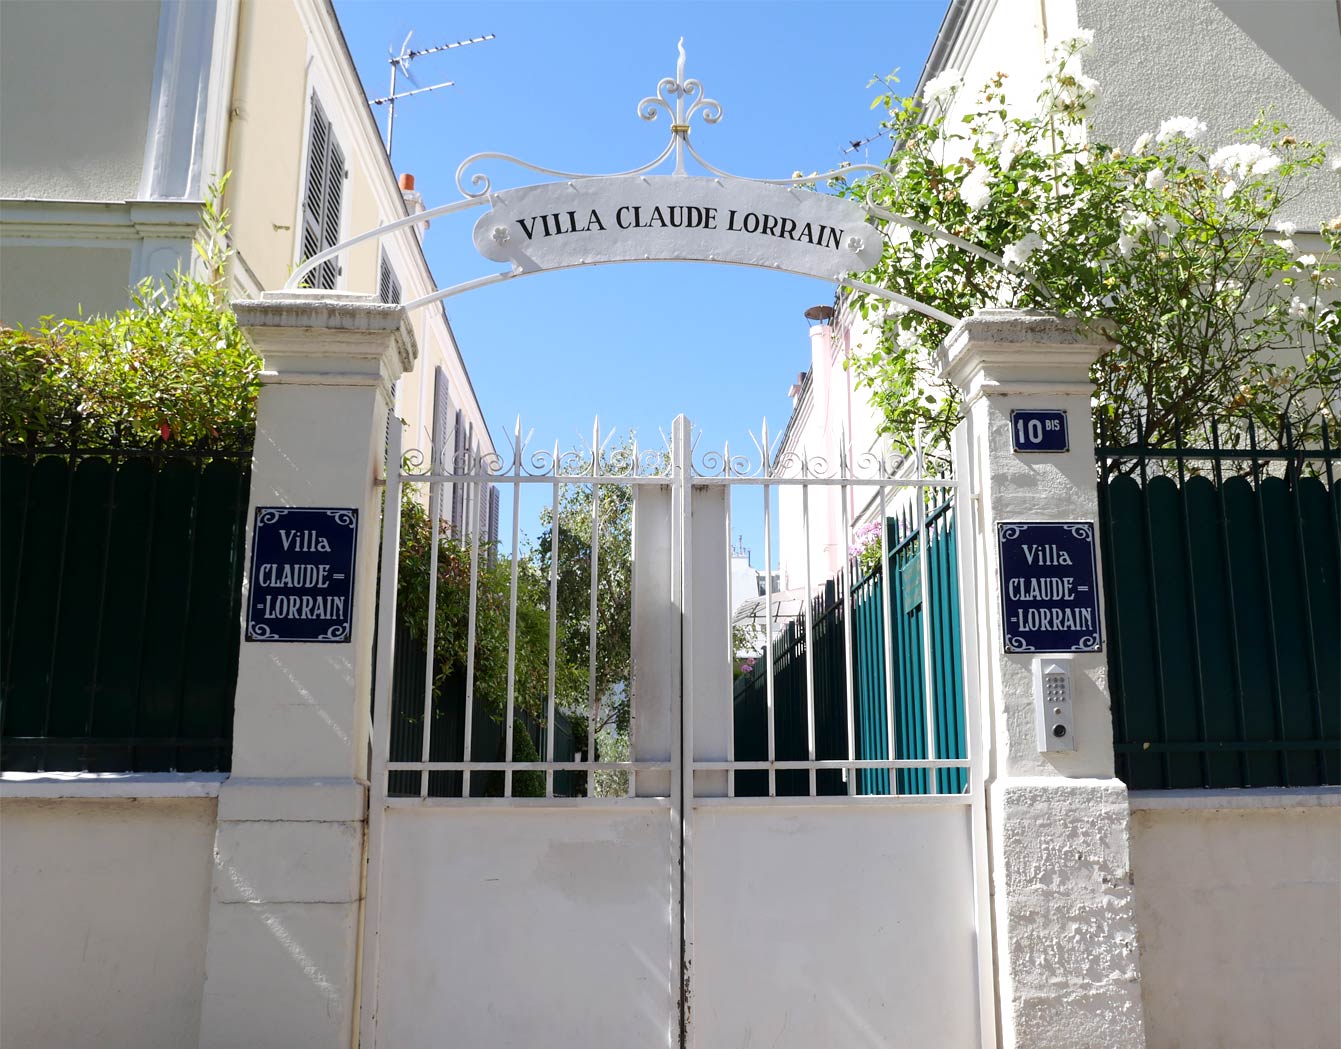 Villa Claude-Lorrain